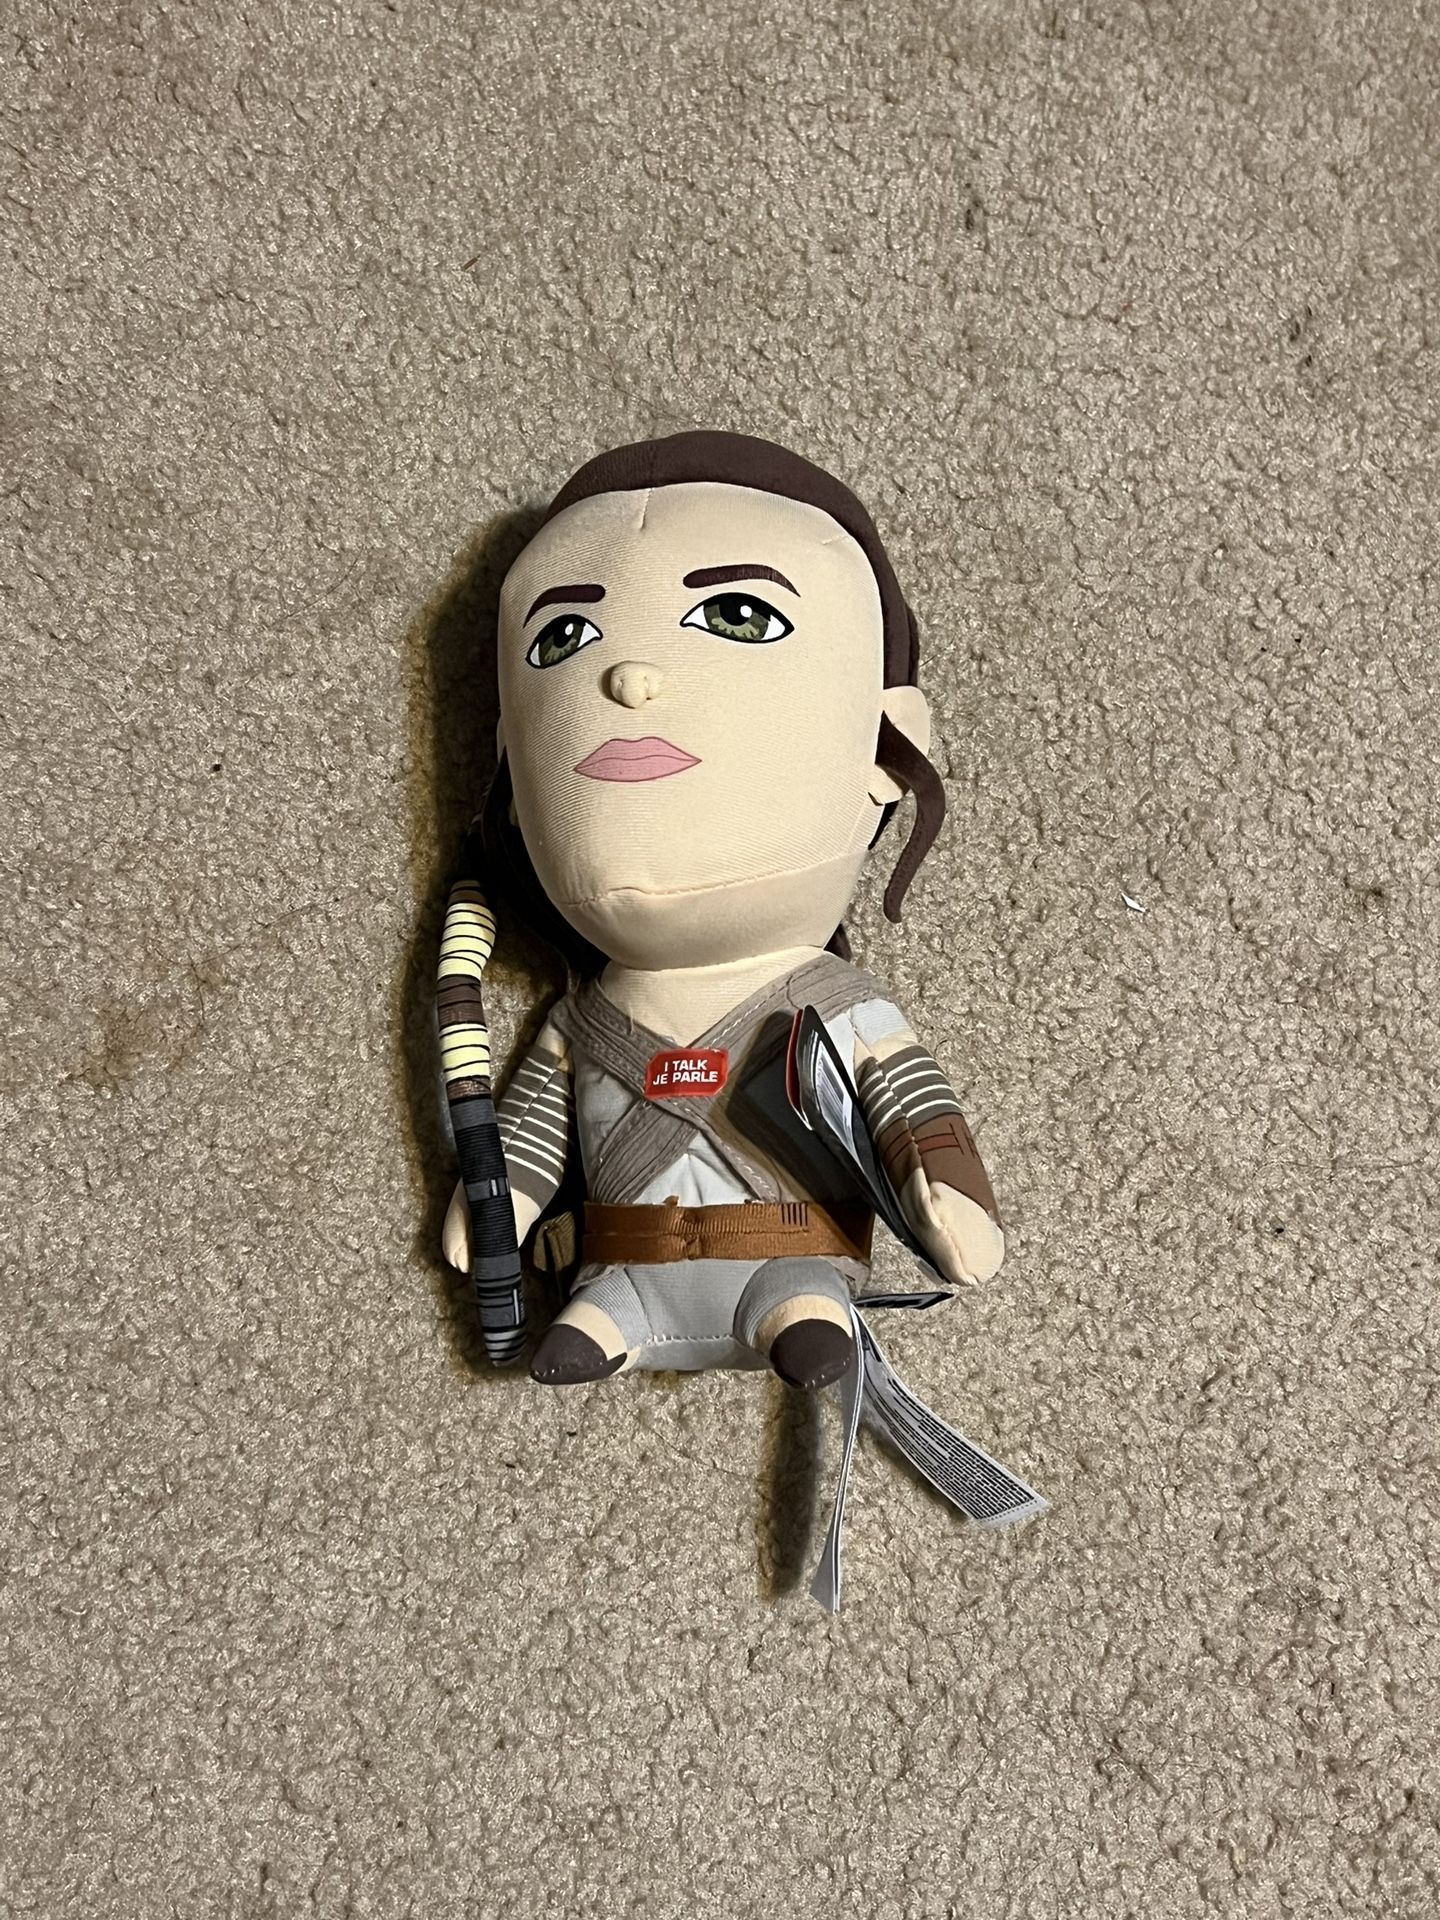 Disney Star Wars VII Rey 9"  Stuffed Talking Plush Toy Original Tags Attached